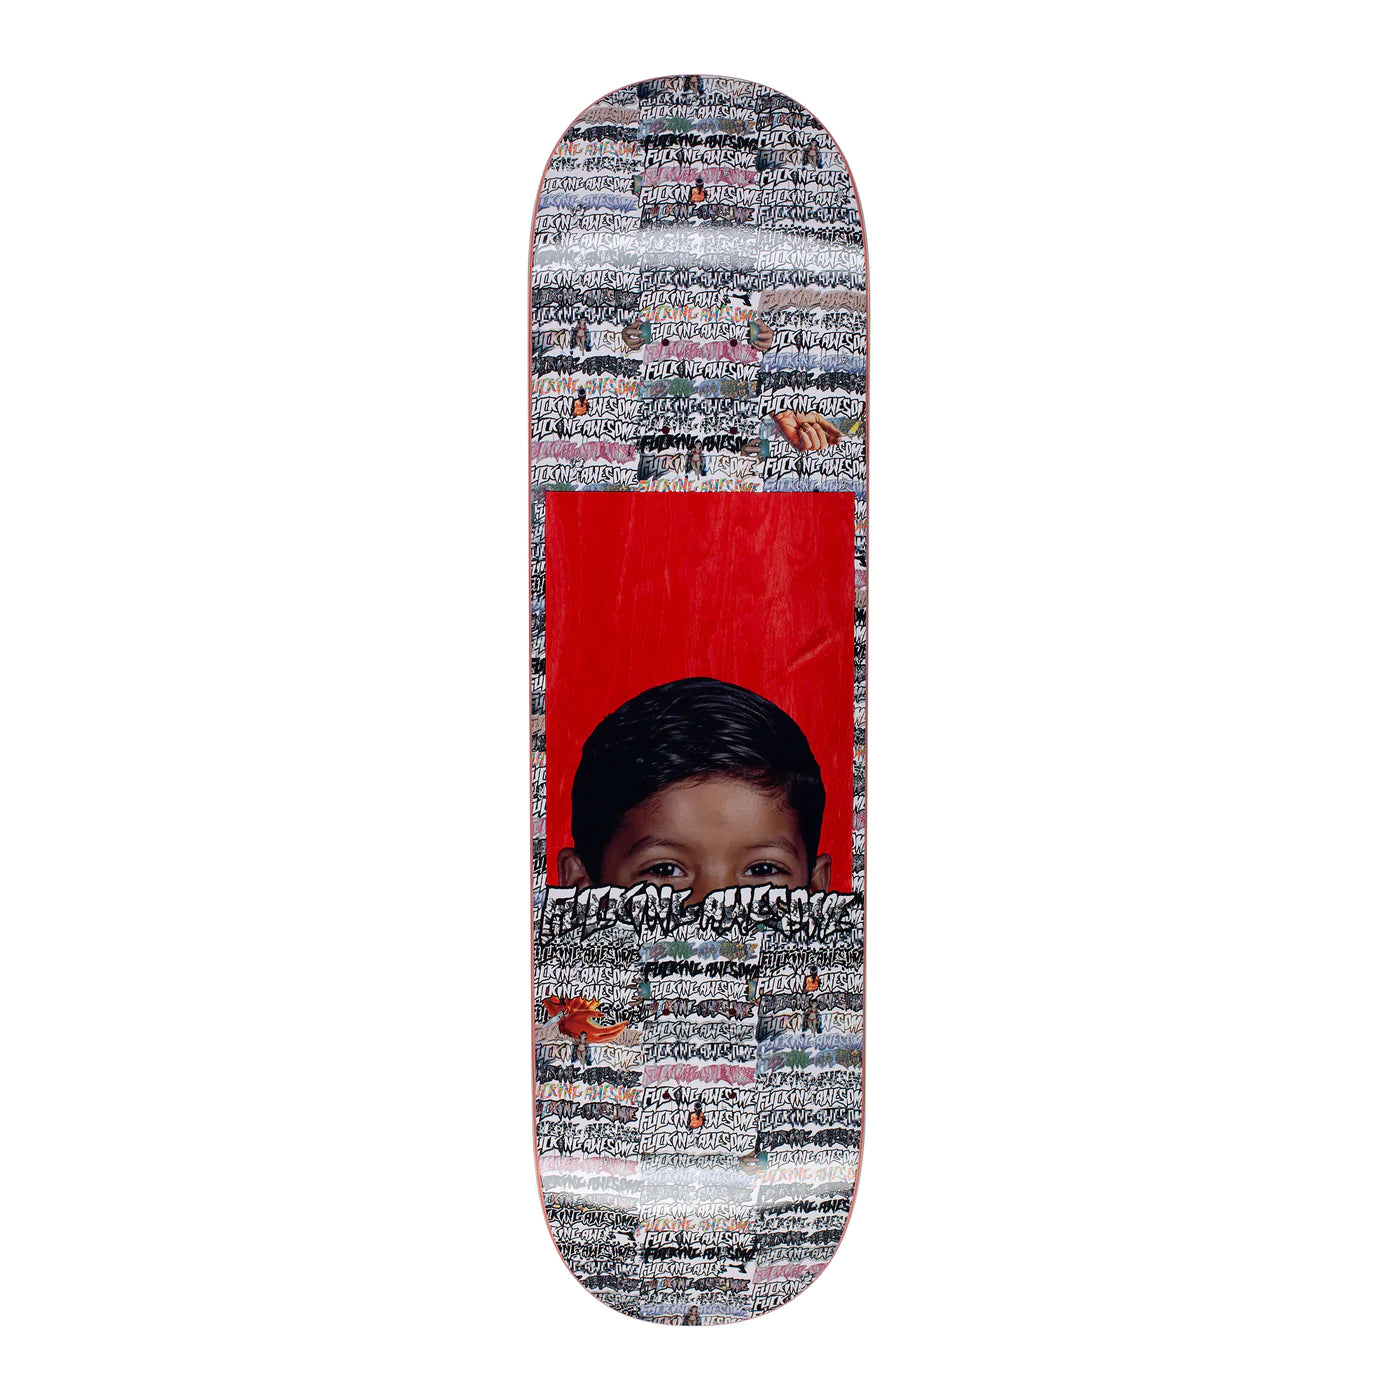 LV Super Red Skate Deck 87x22 cm